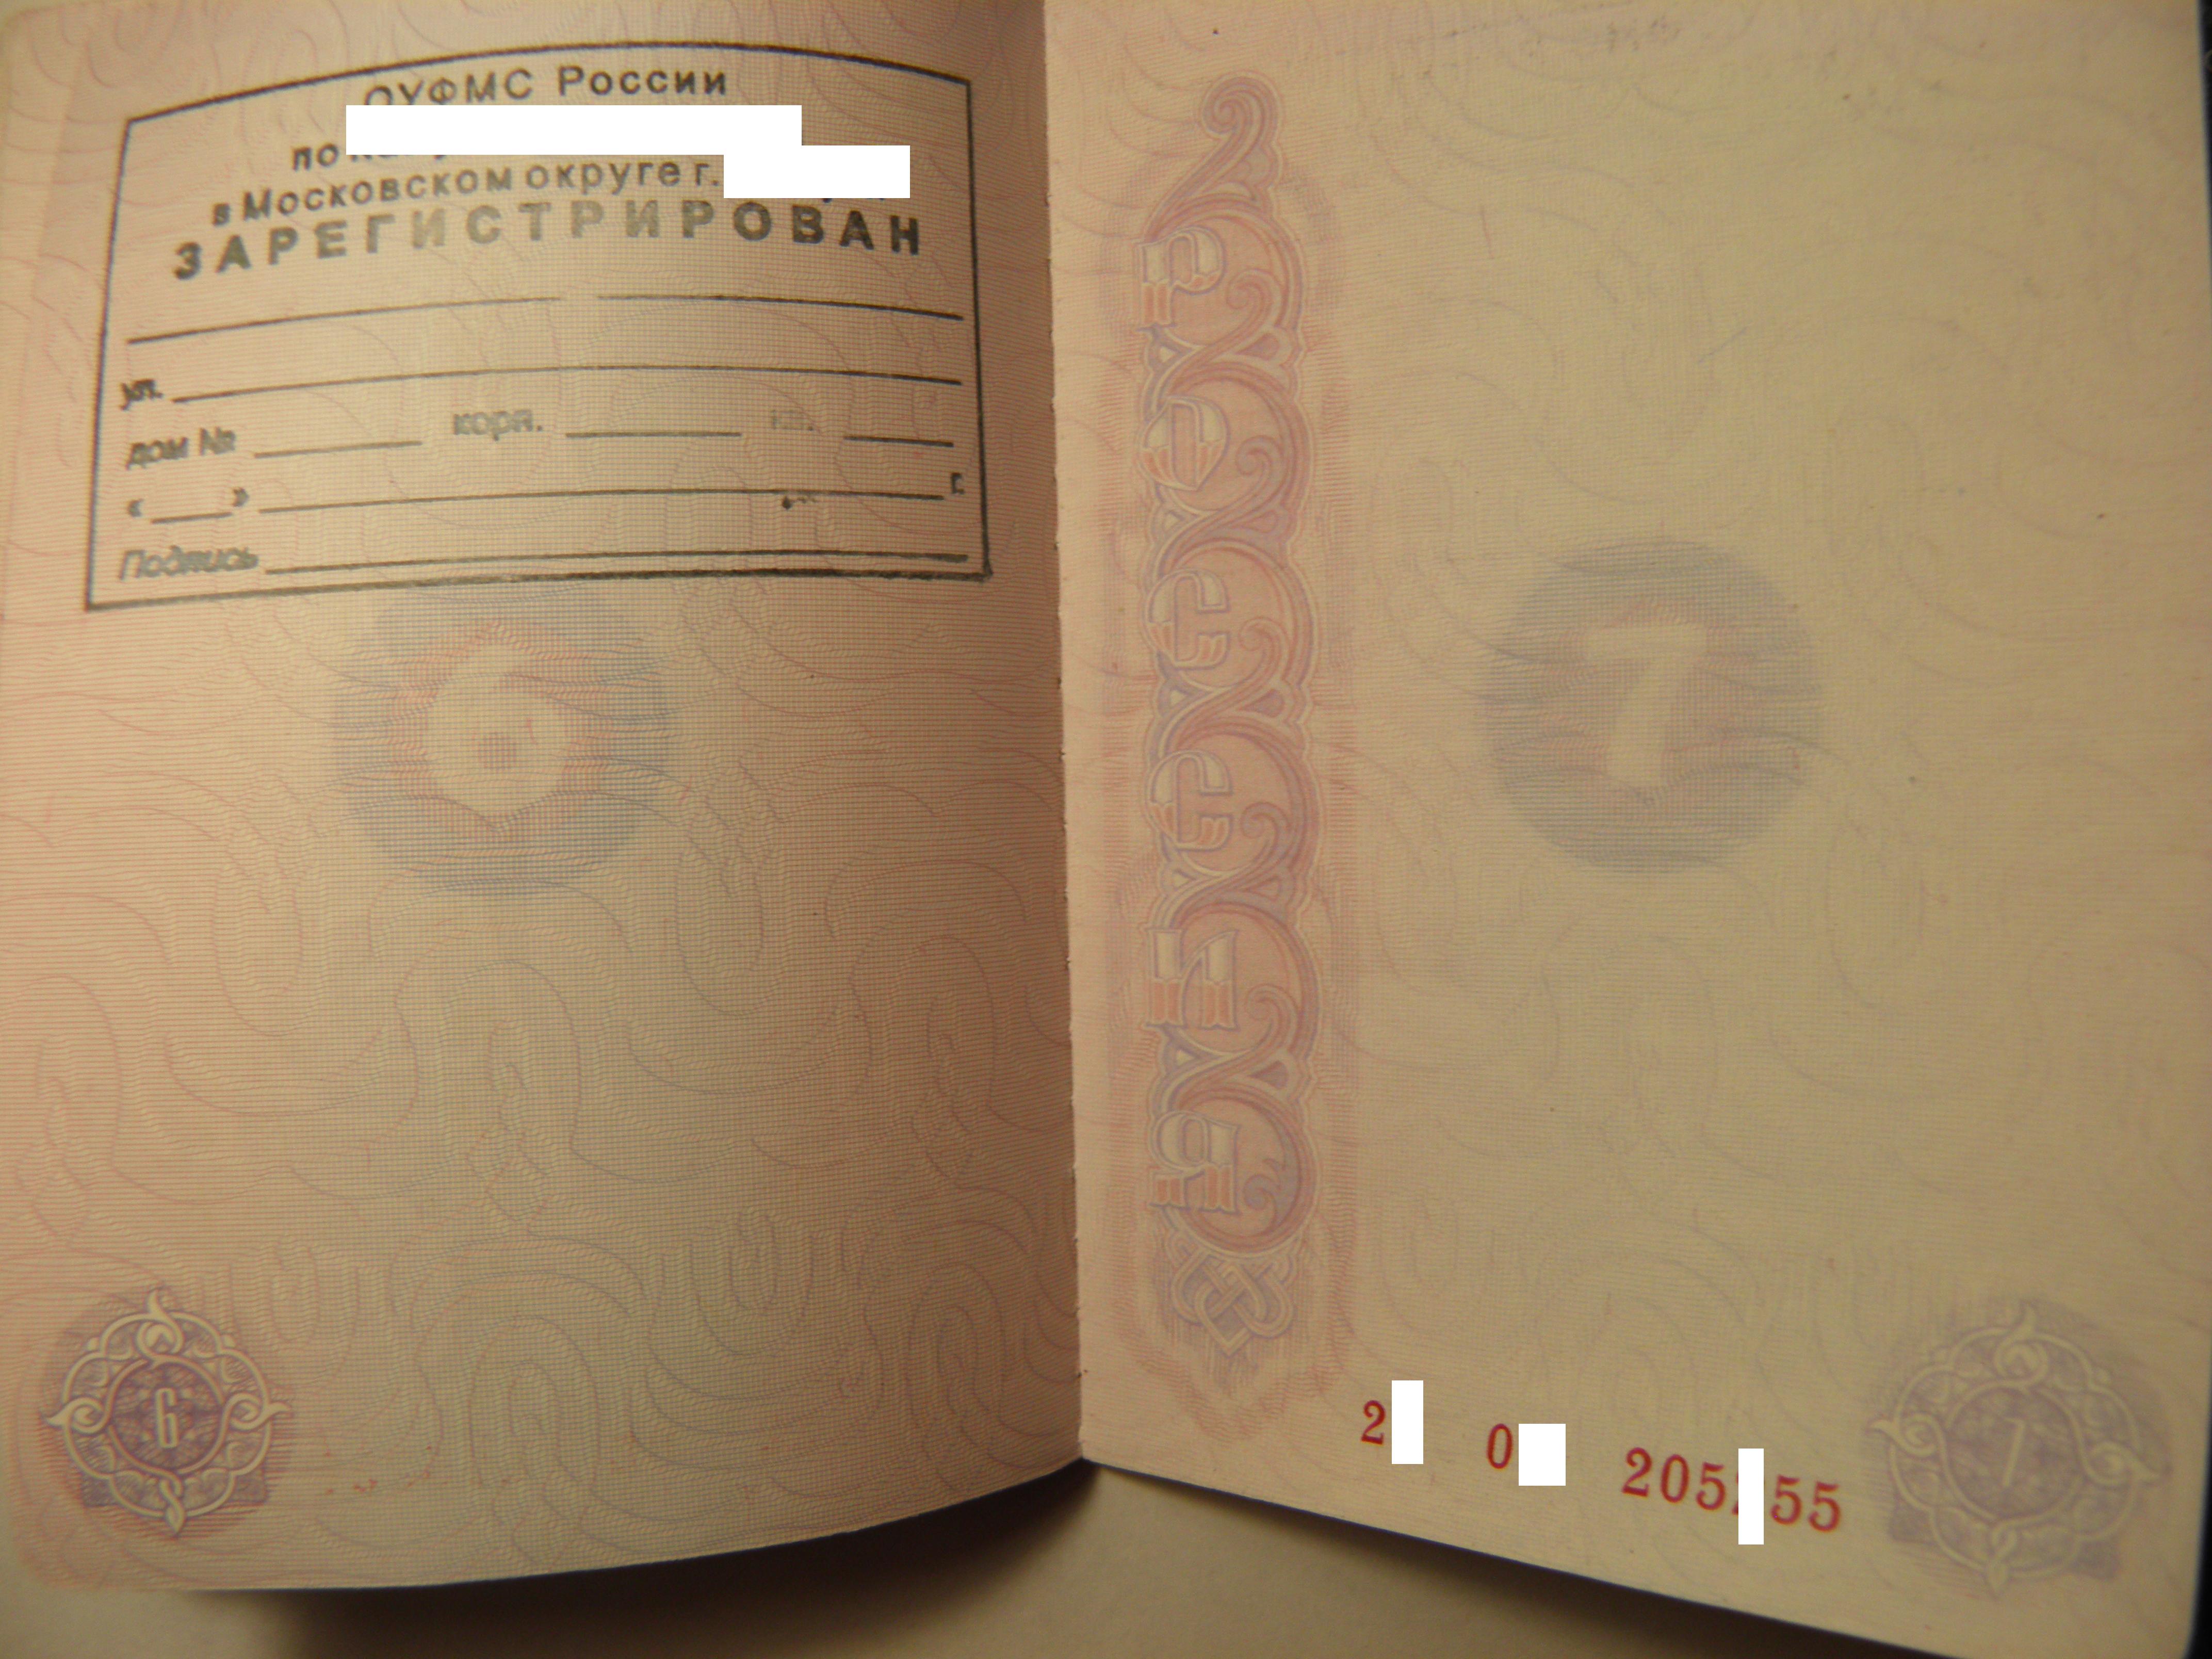 6-7 Страница паспорта